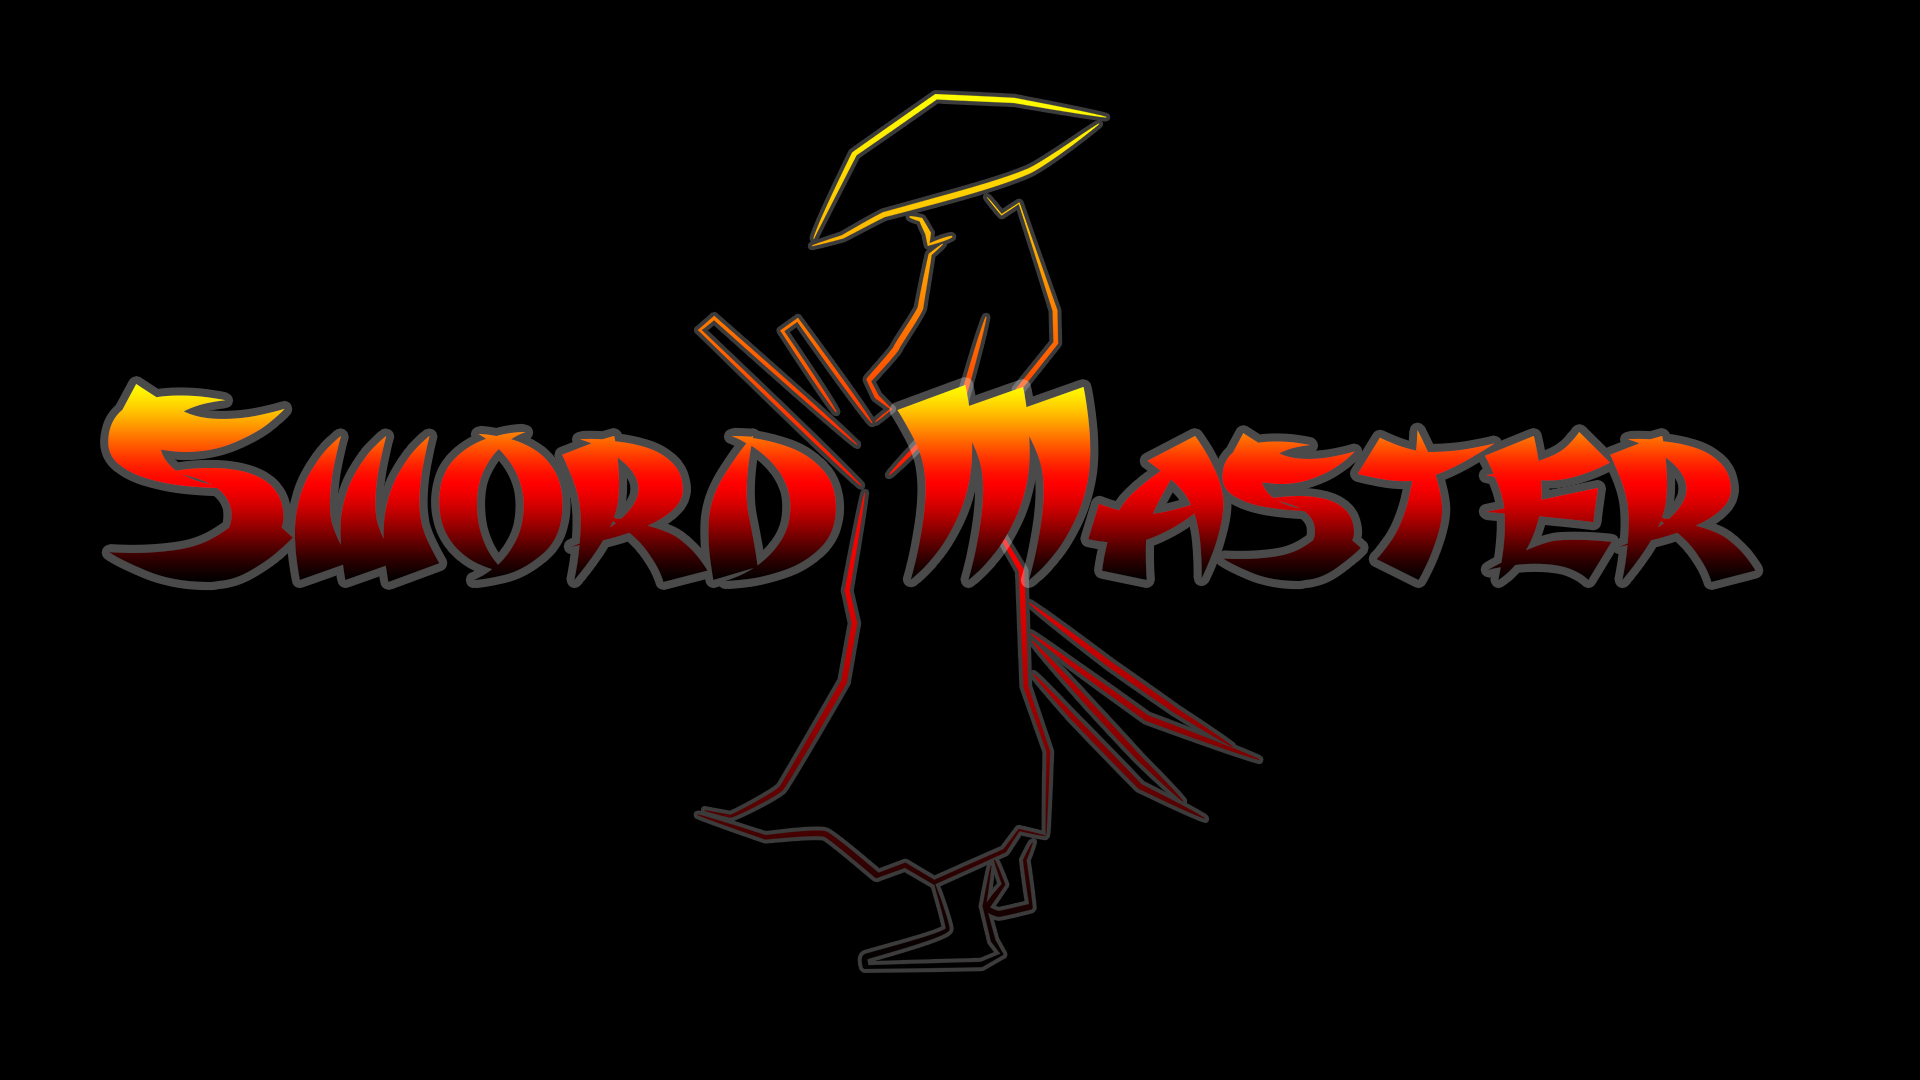 Sword Master